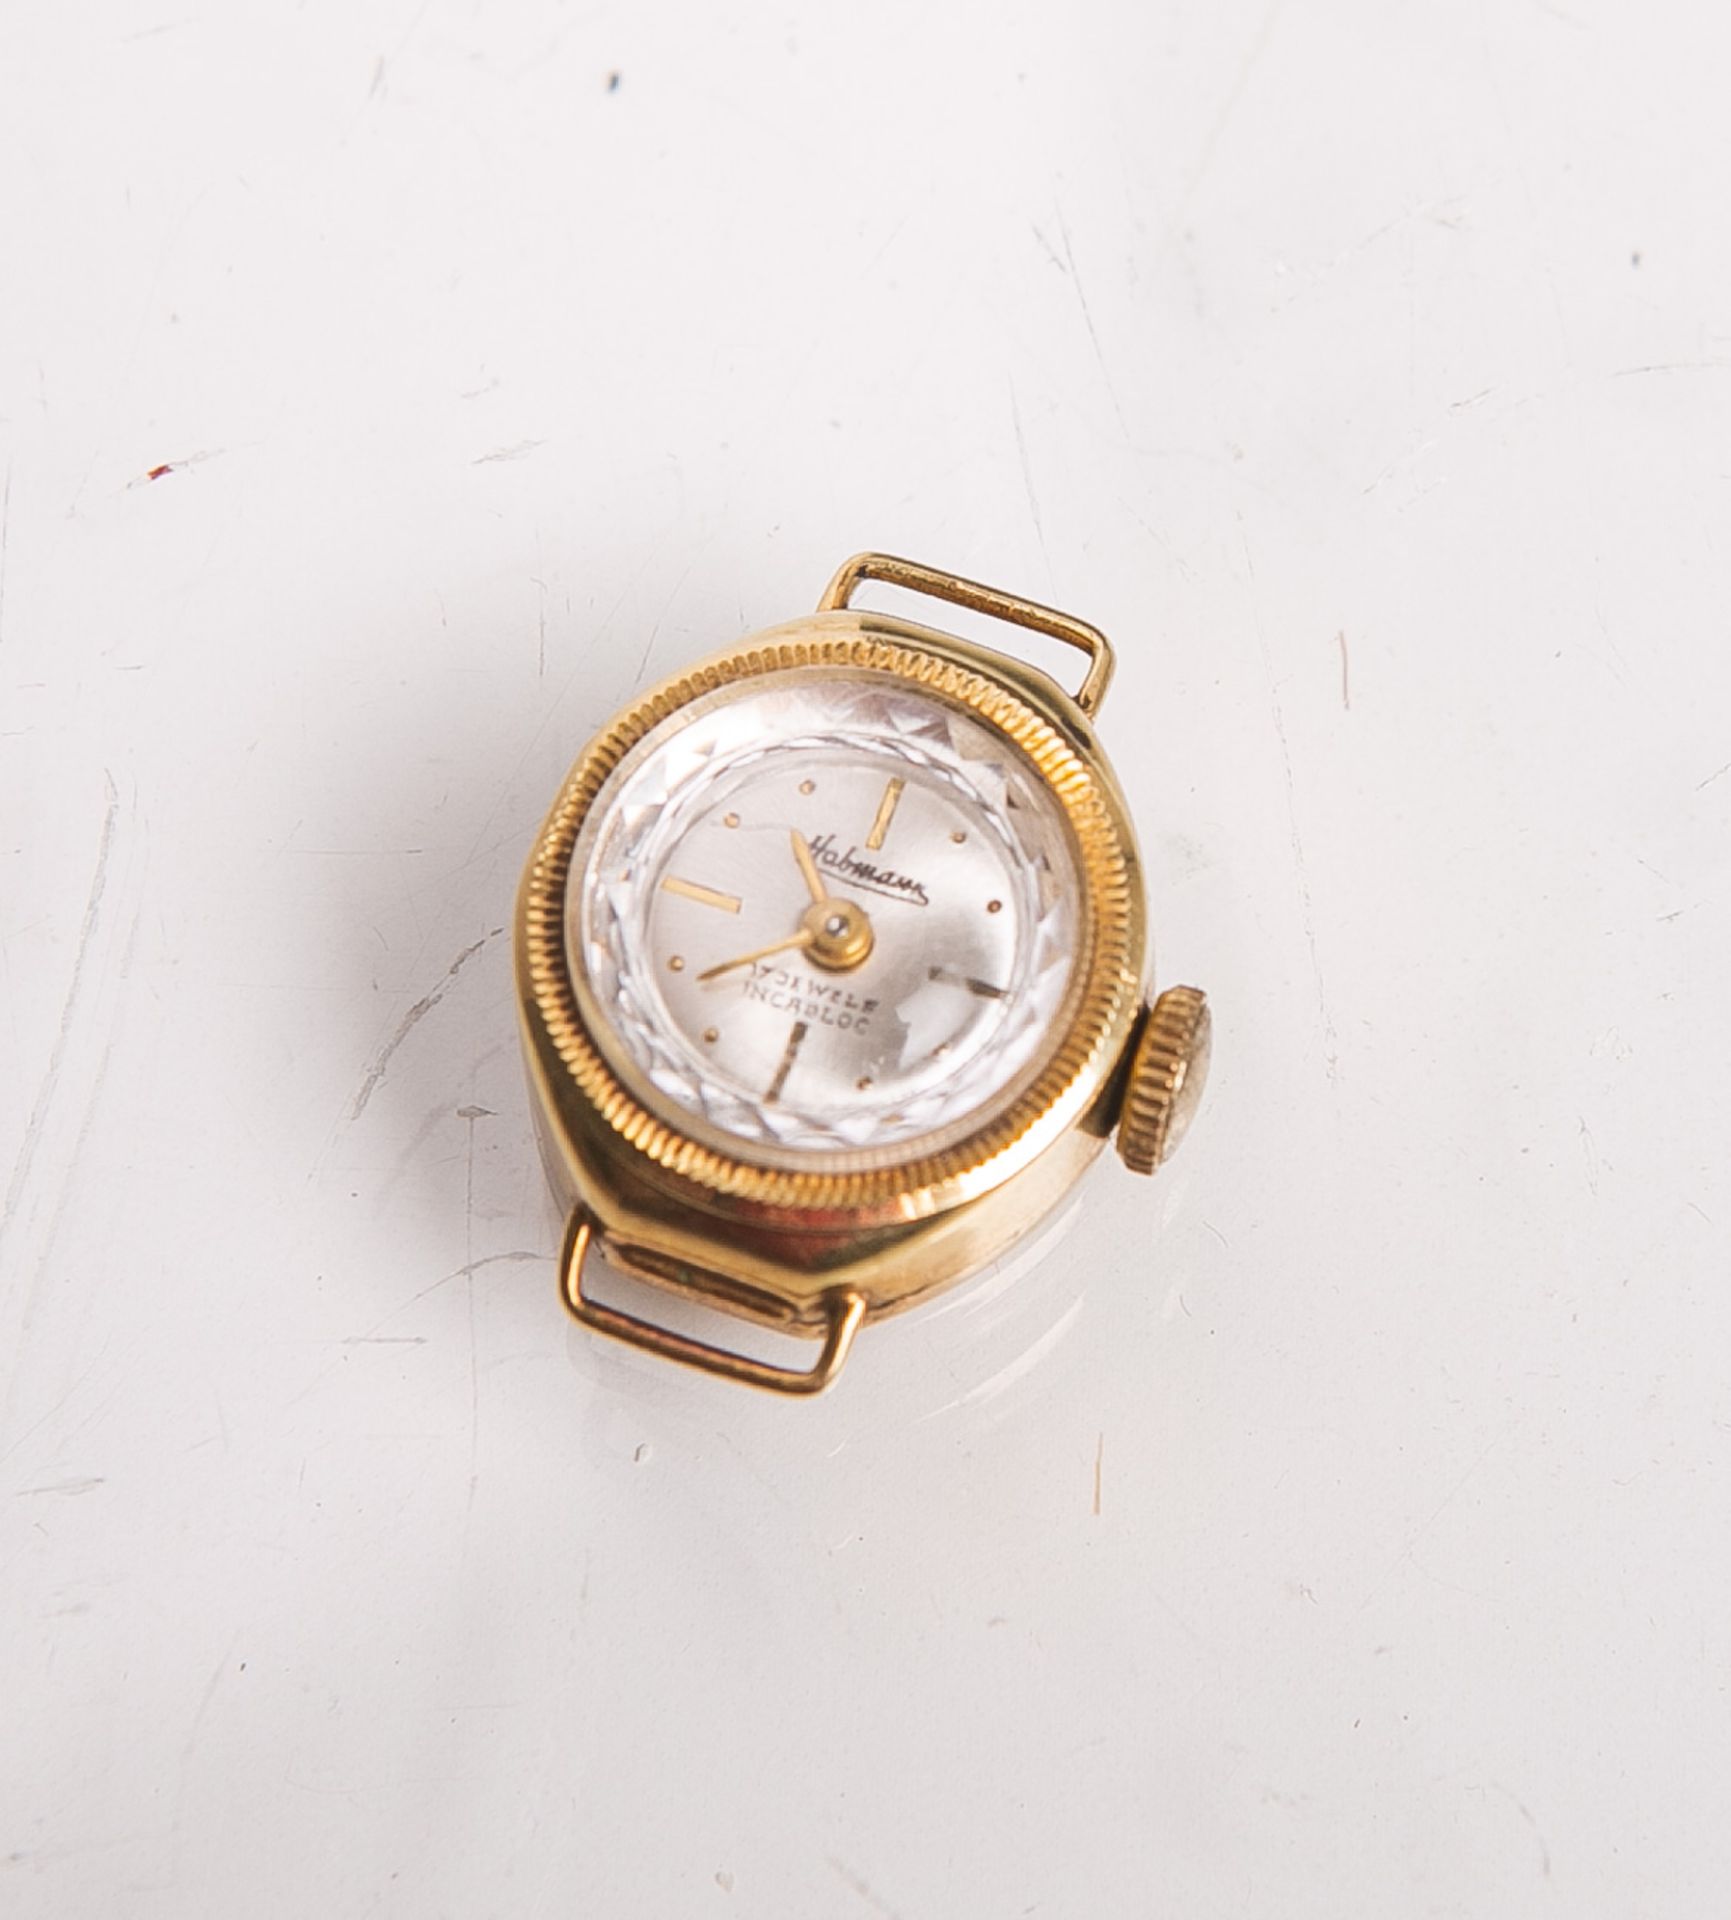 Damenarmbanduhr "Habmann" 585 GG ohne Band, Incablock, weißes Zifferblatt m. goldenen